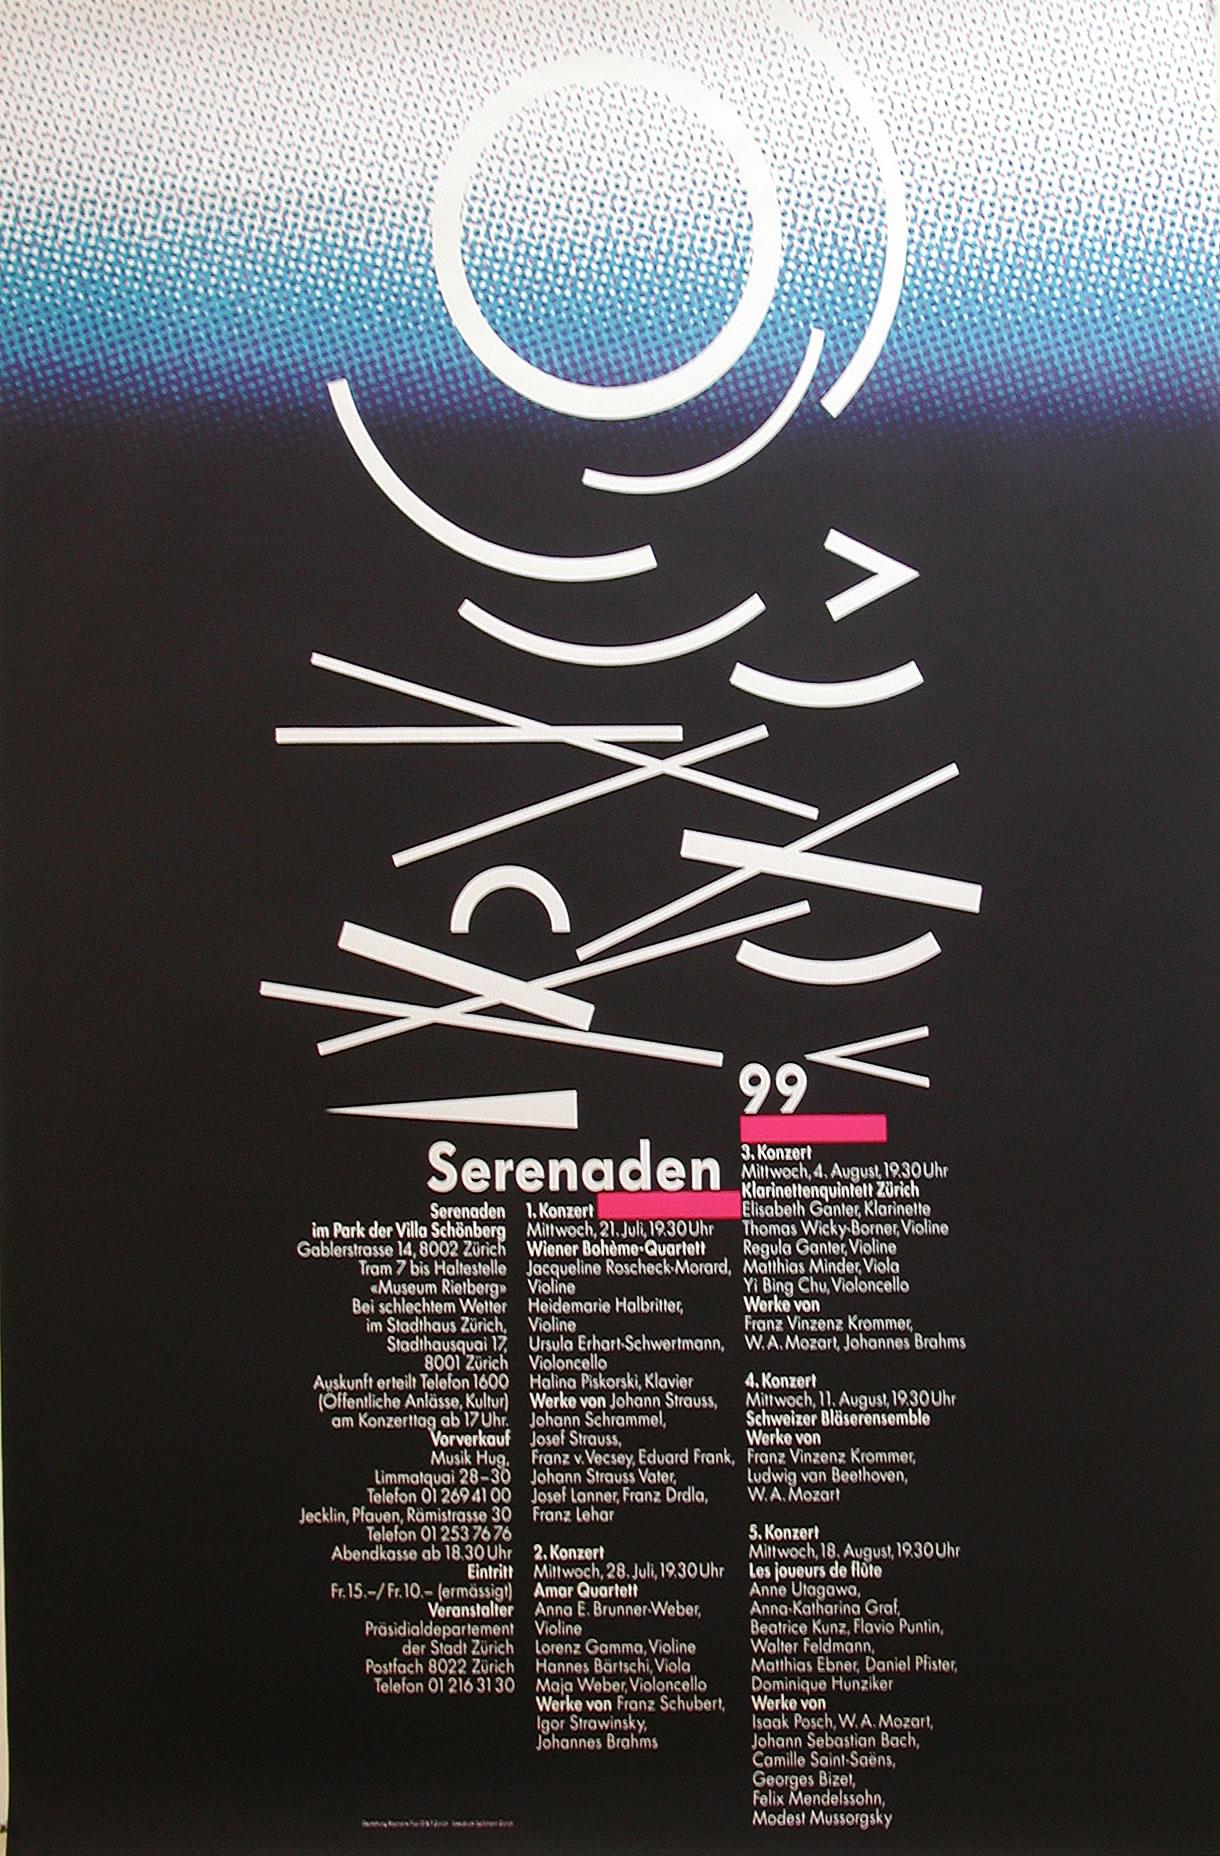 Odermatt & Tissi Abstract Print - "Serenaden 99" Swiss Post Modern Music Festival Original Vintage Poster